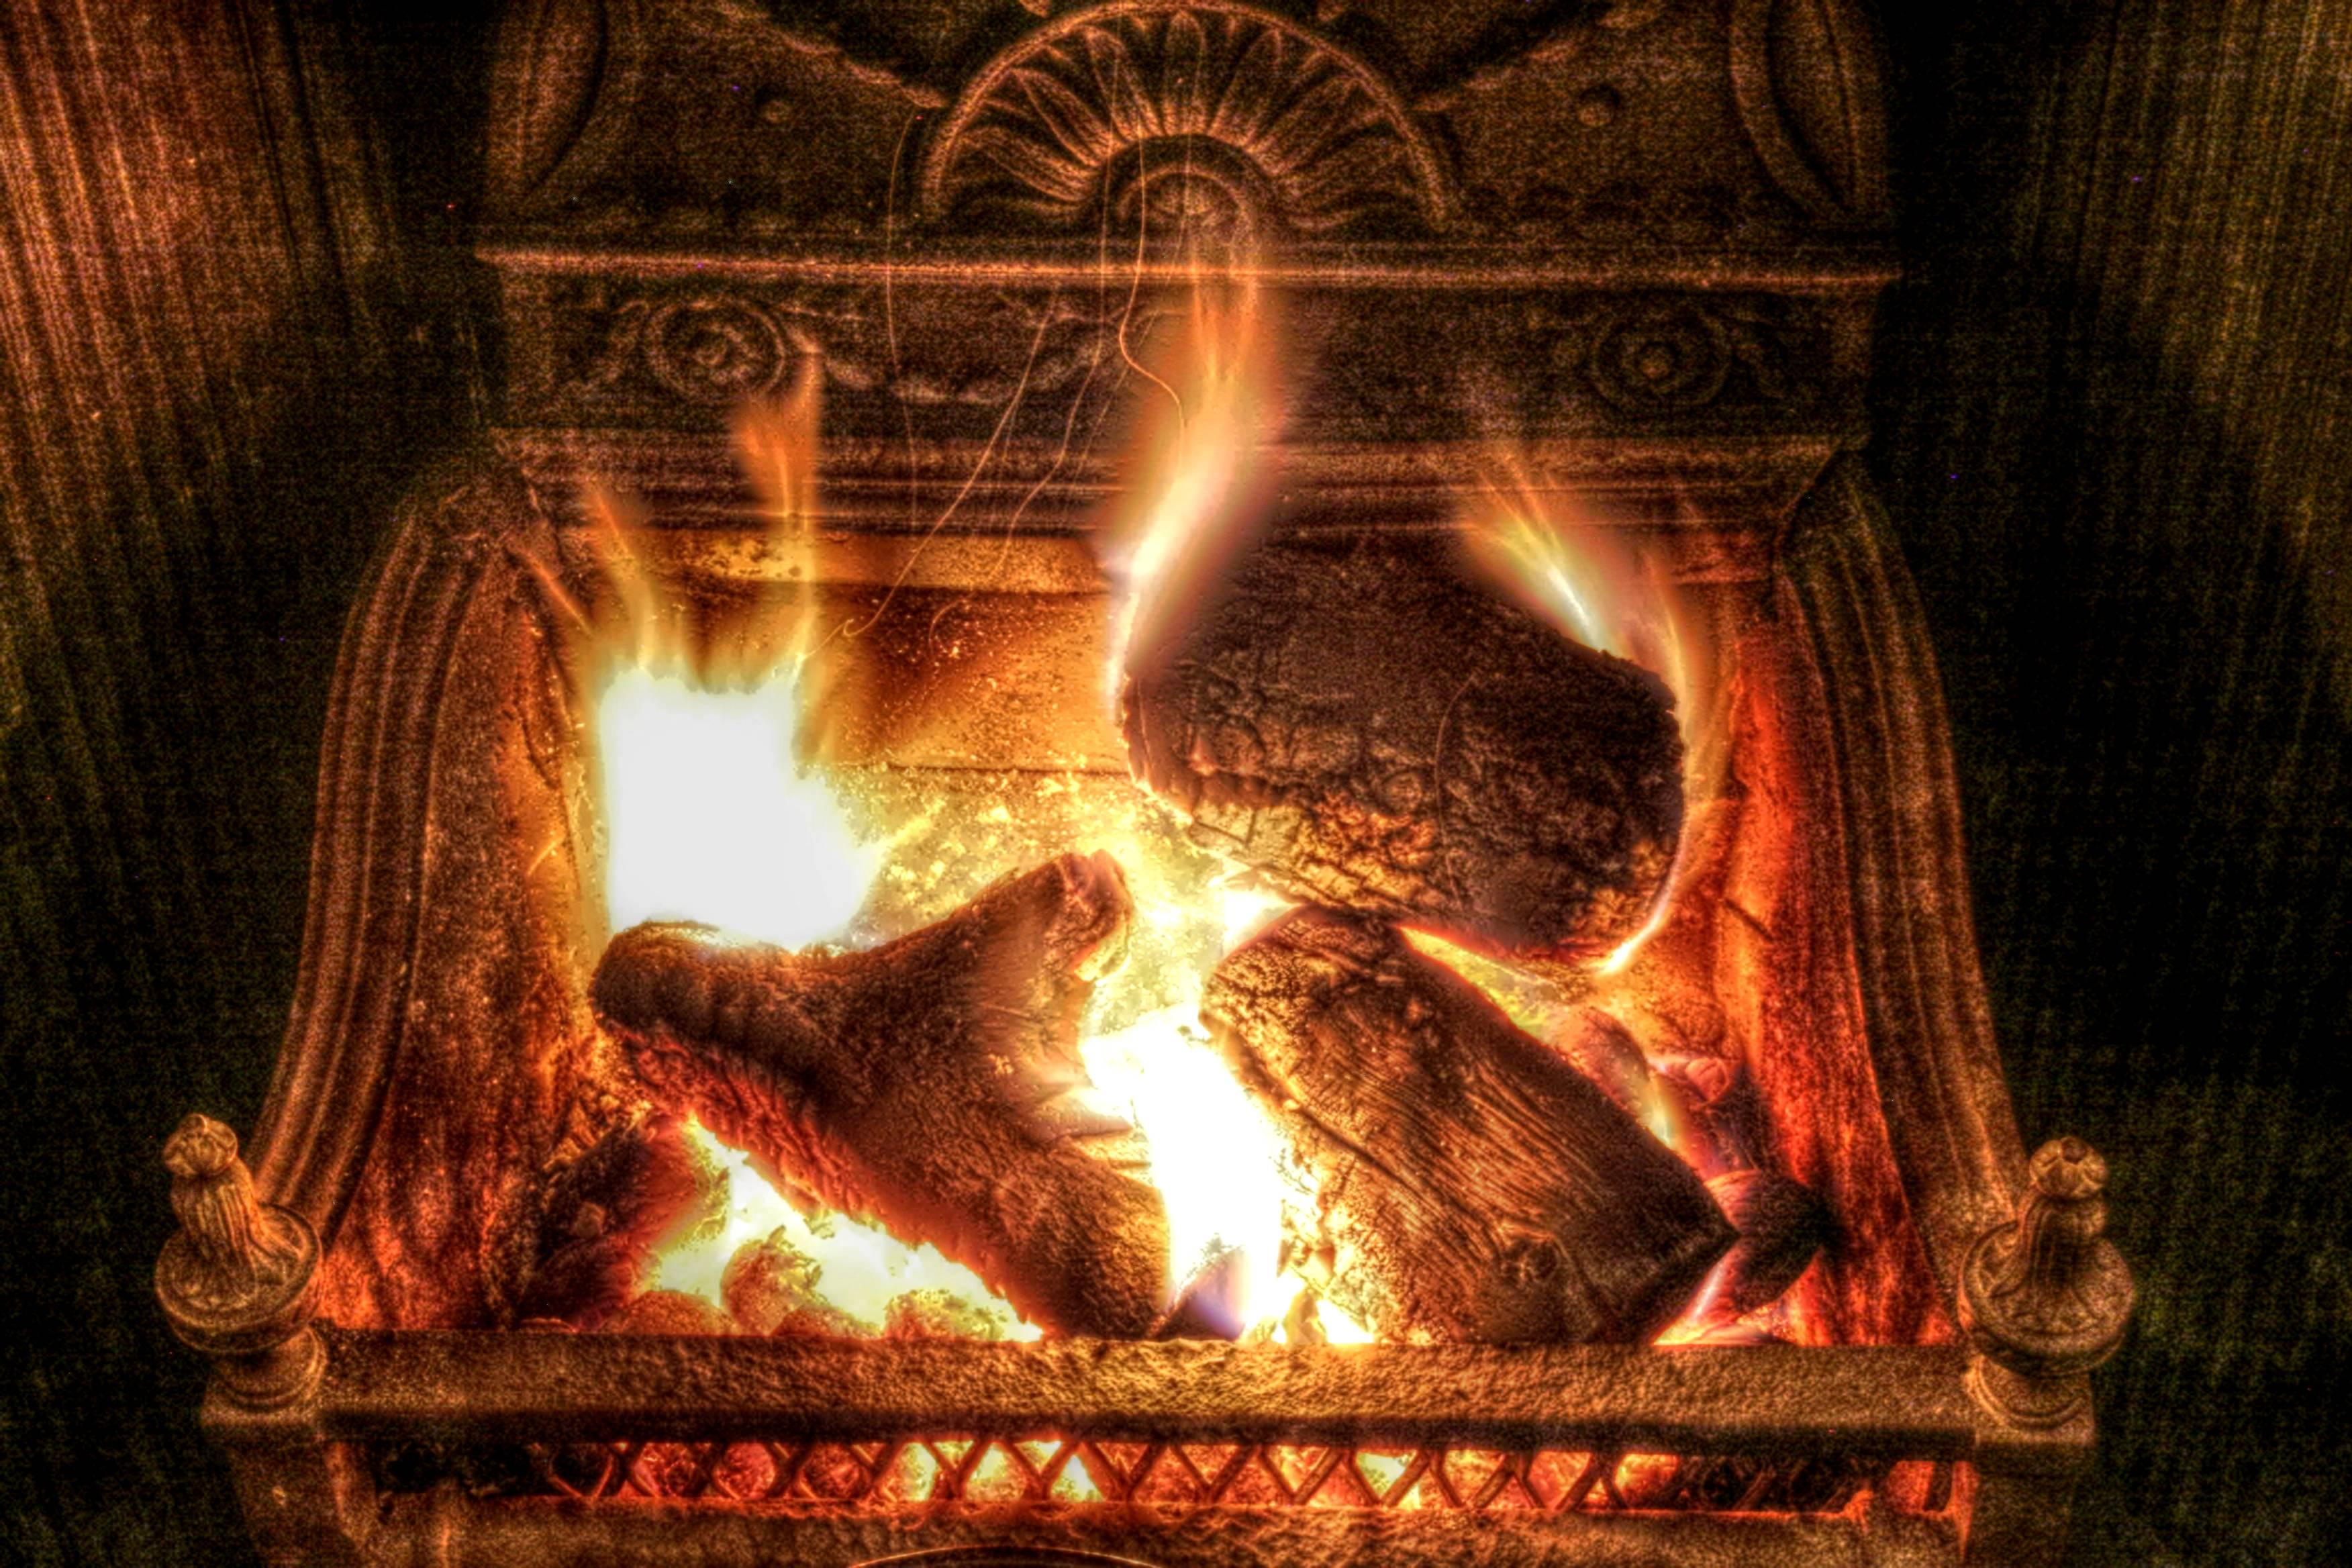 Winter Fireplace Background